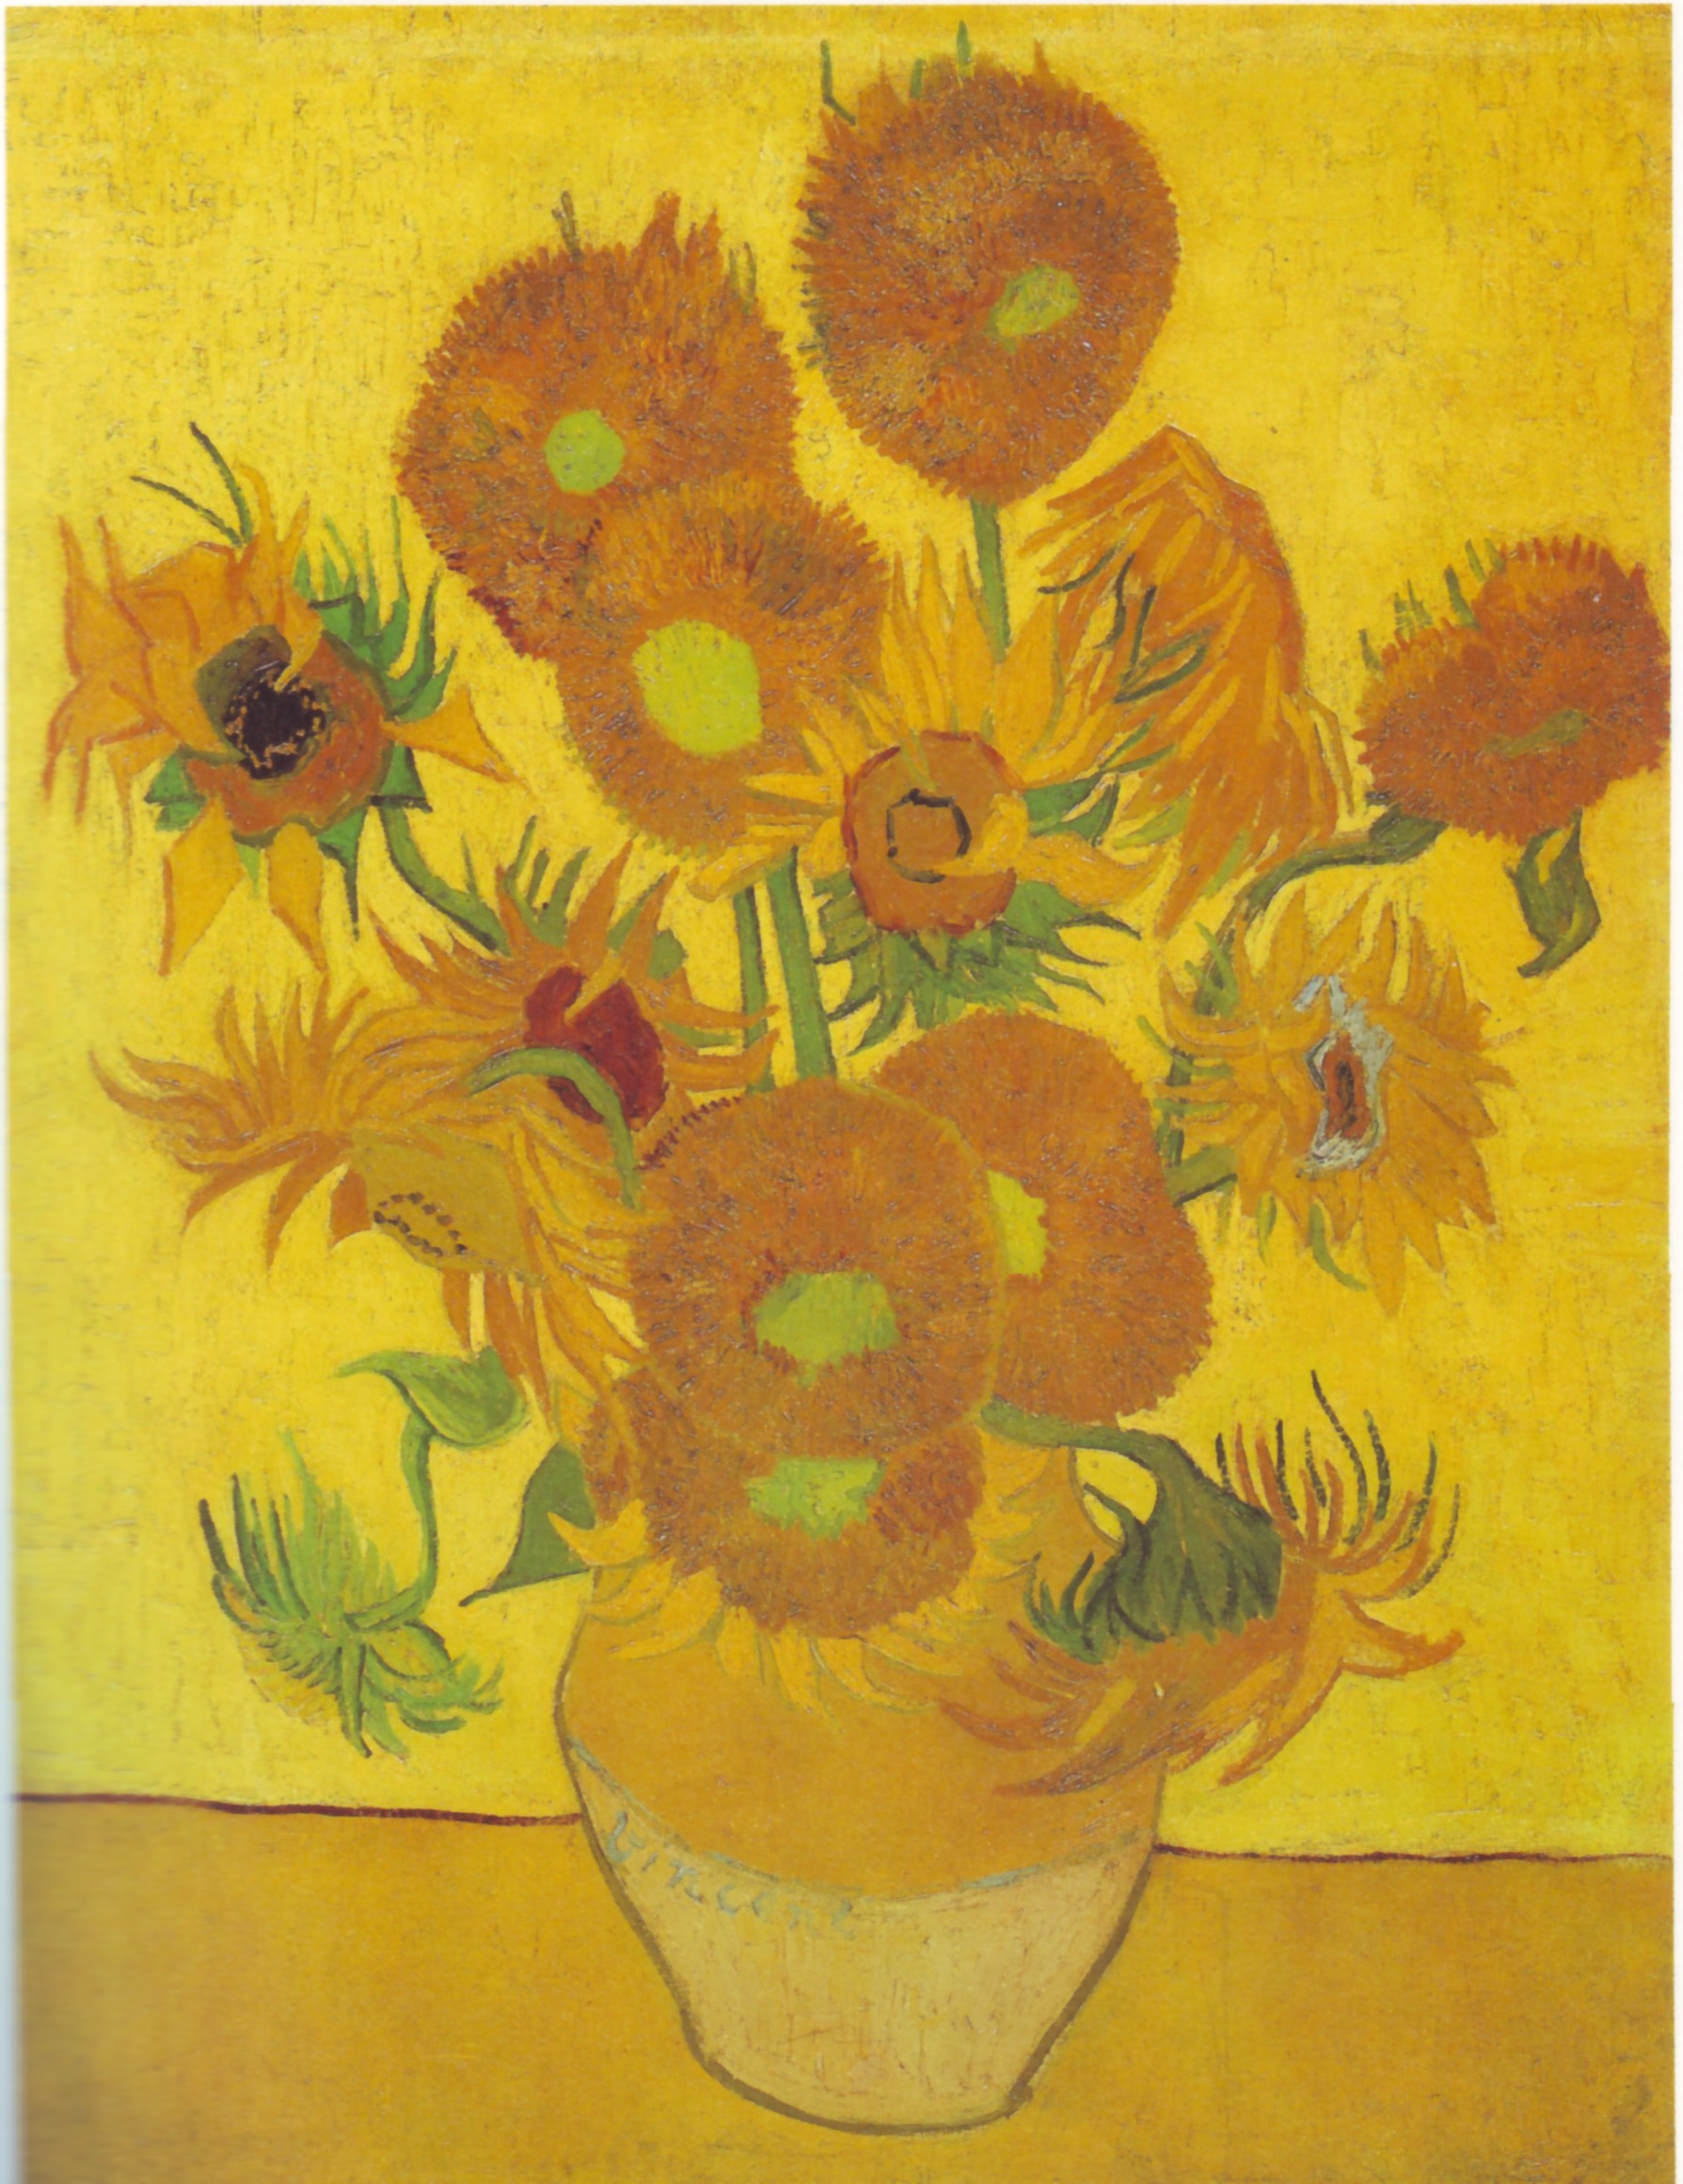  Vincent Van Gogh, Sunflowers Arles, 1888, oil on canvas, 92.5 x 73 cm, Vincent van Gogh Foundation / National Museum Vincent van Gogh, Amsterdam